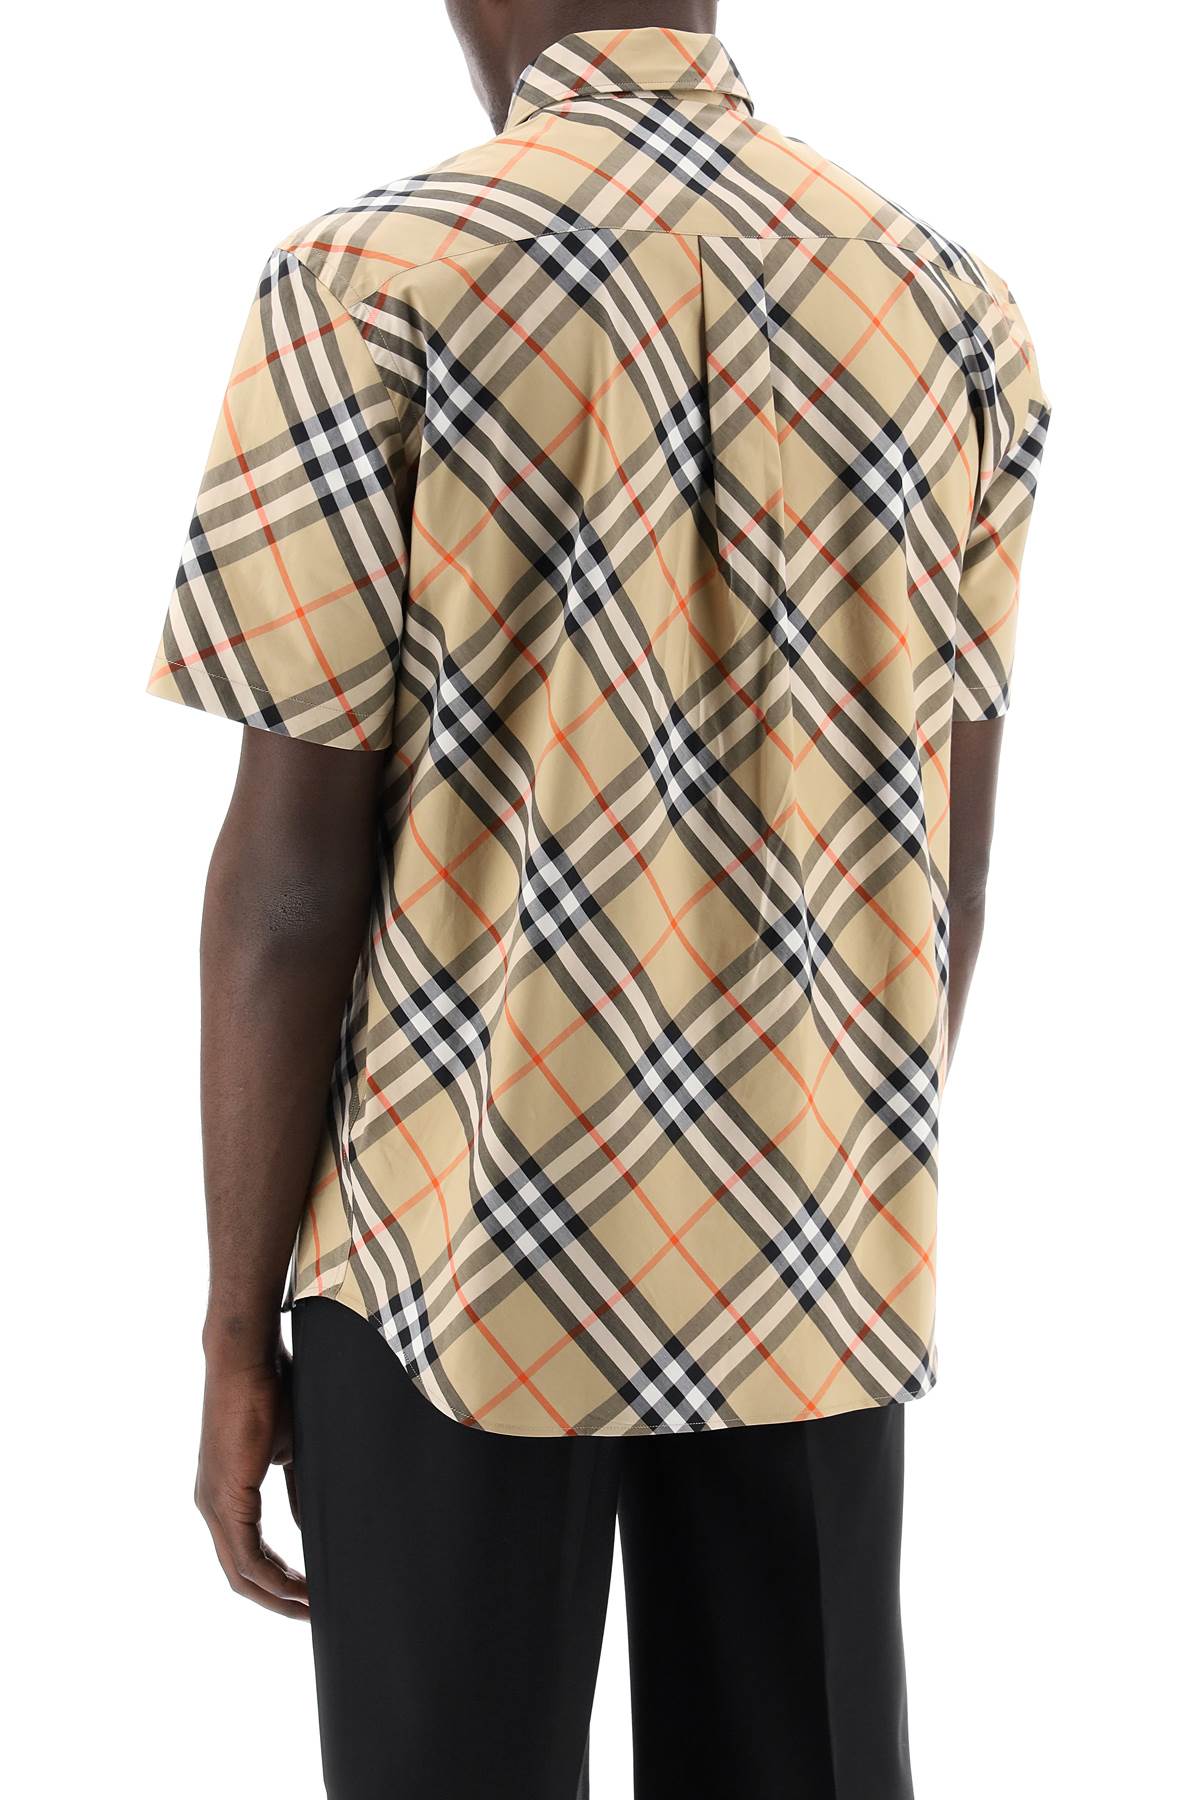 BURBERRY Vintage Check Men's Tan Cotton Shirt